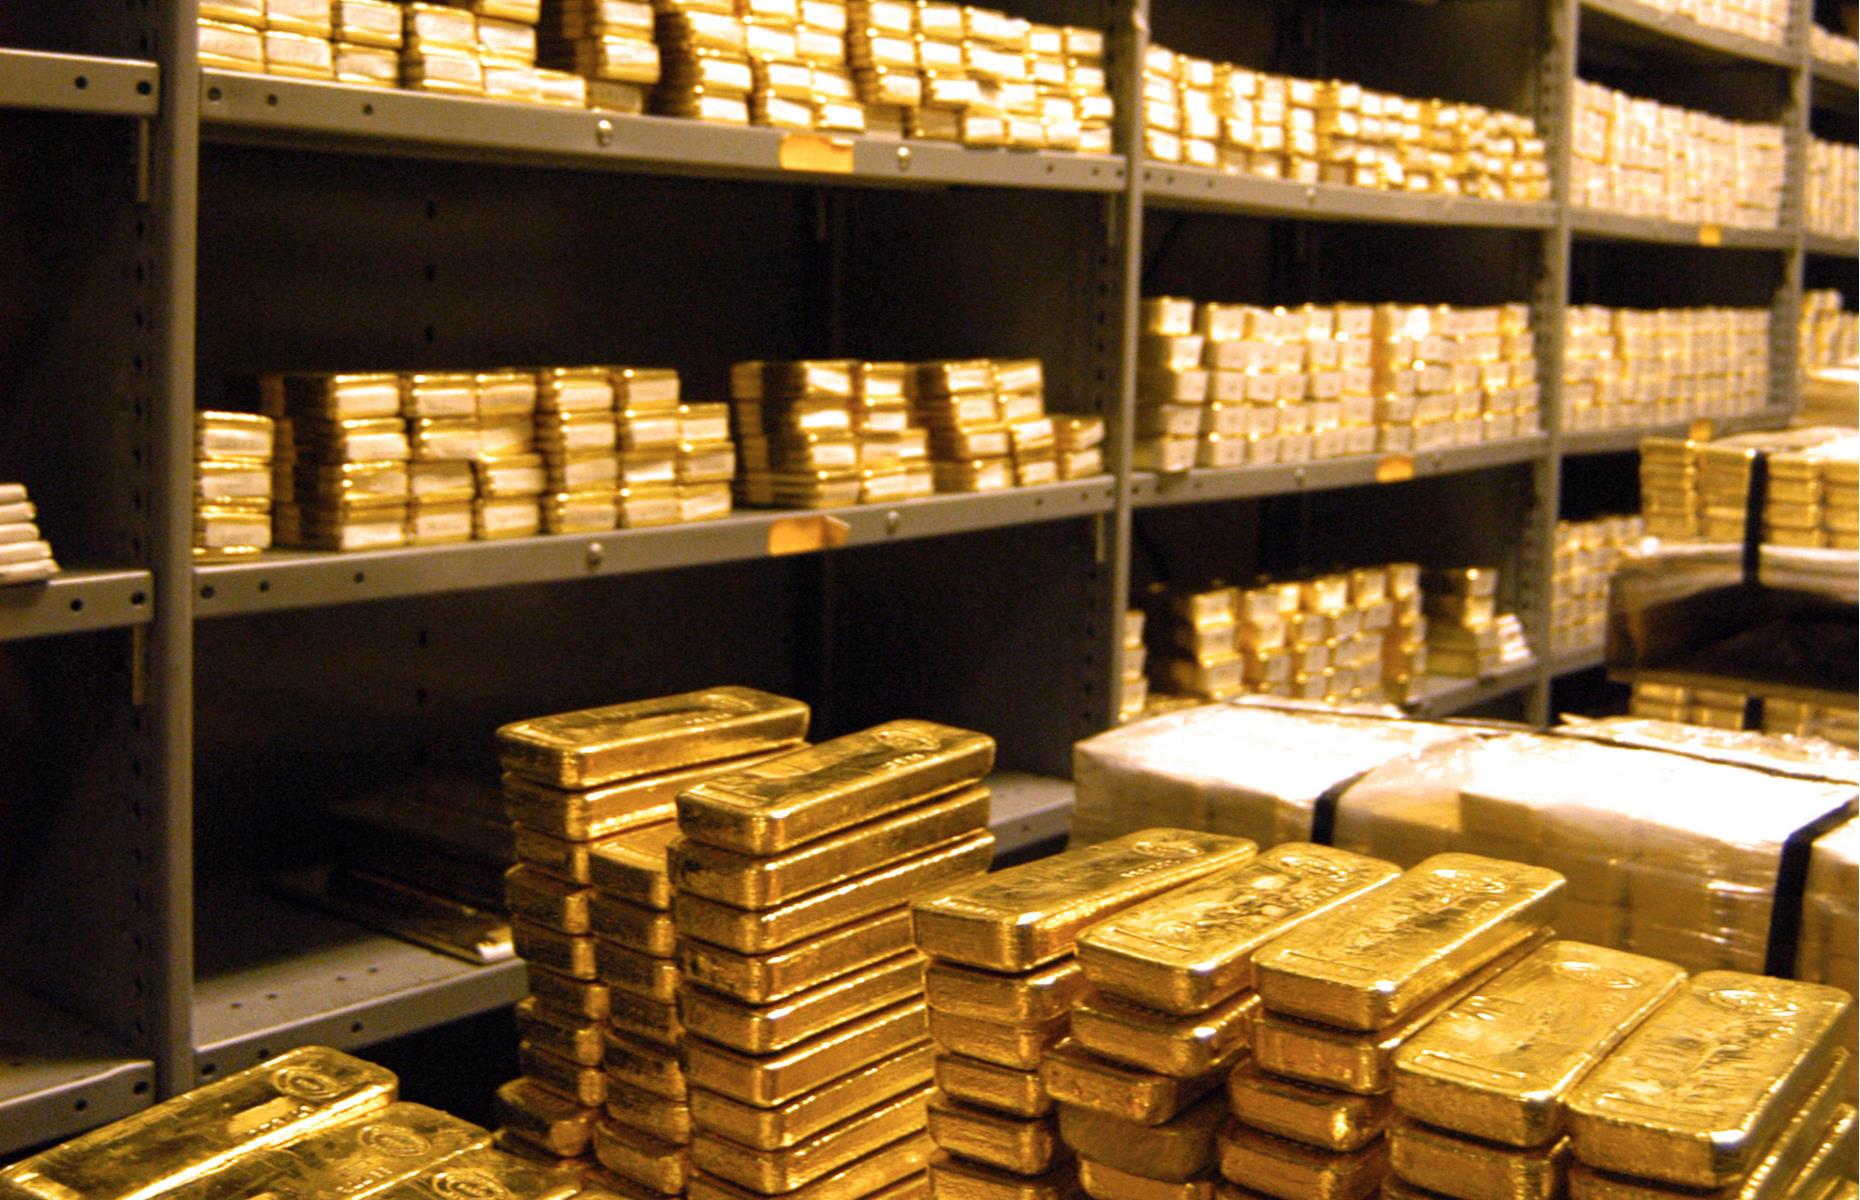 Who's stockpiling gold?